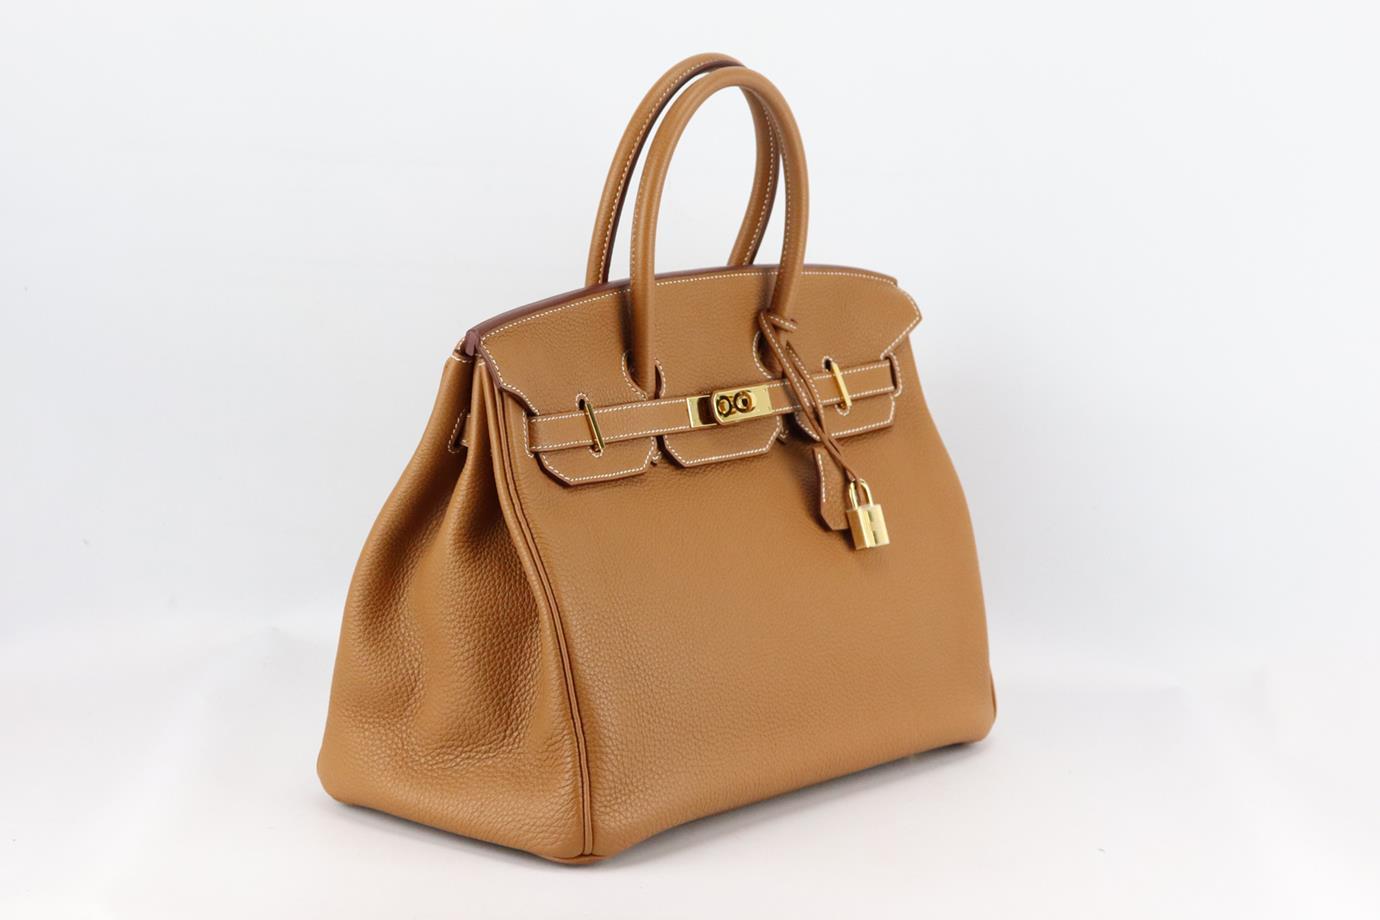 Hermès 2011 Birkin 35cm Togo Leather Bag For Sale 1